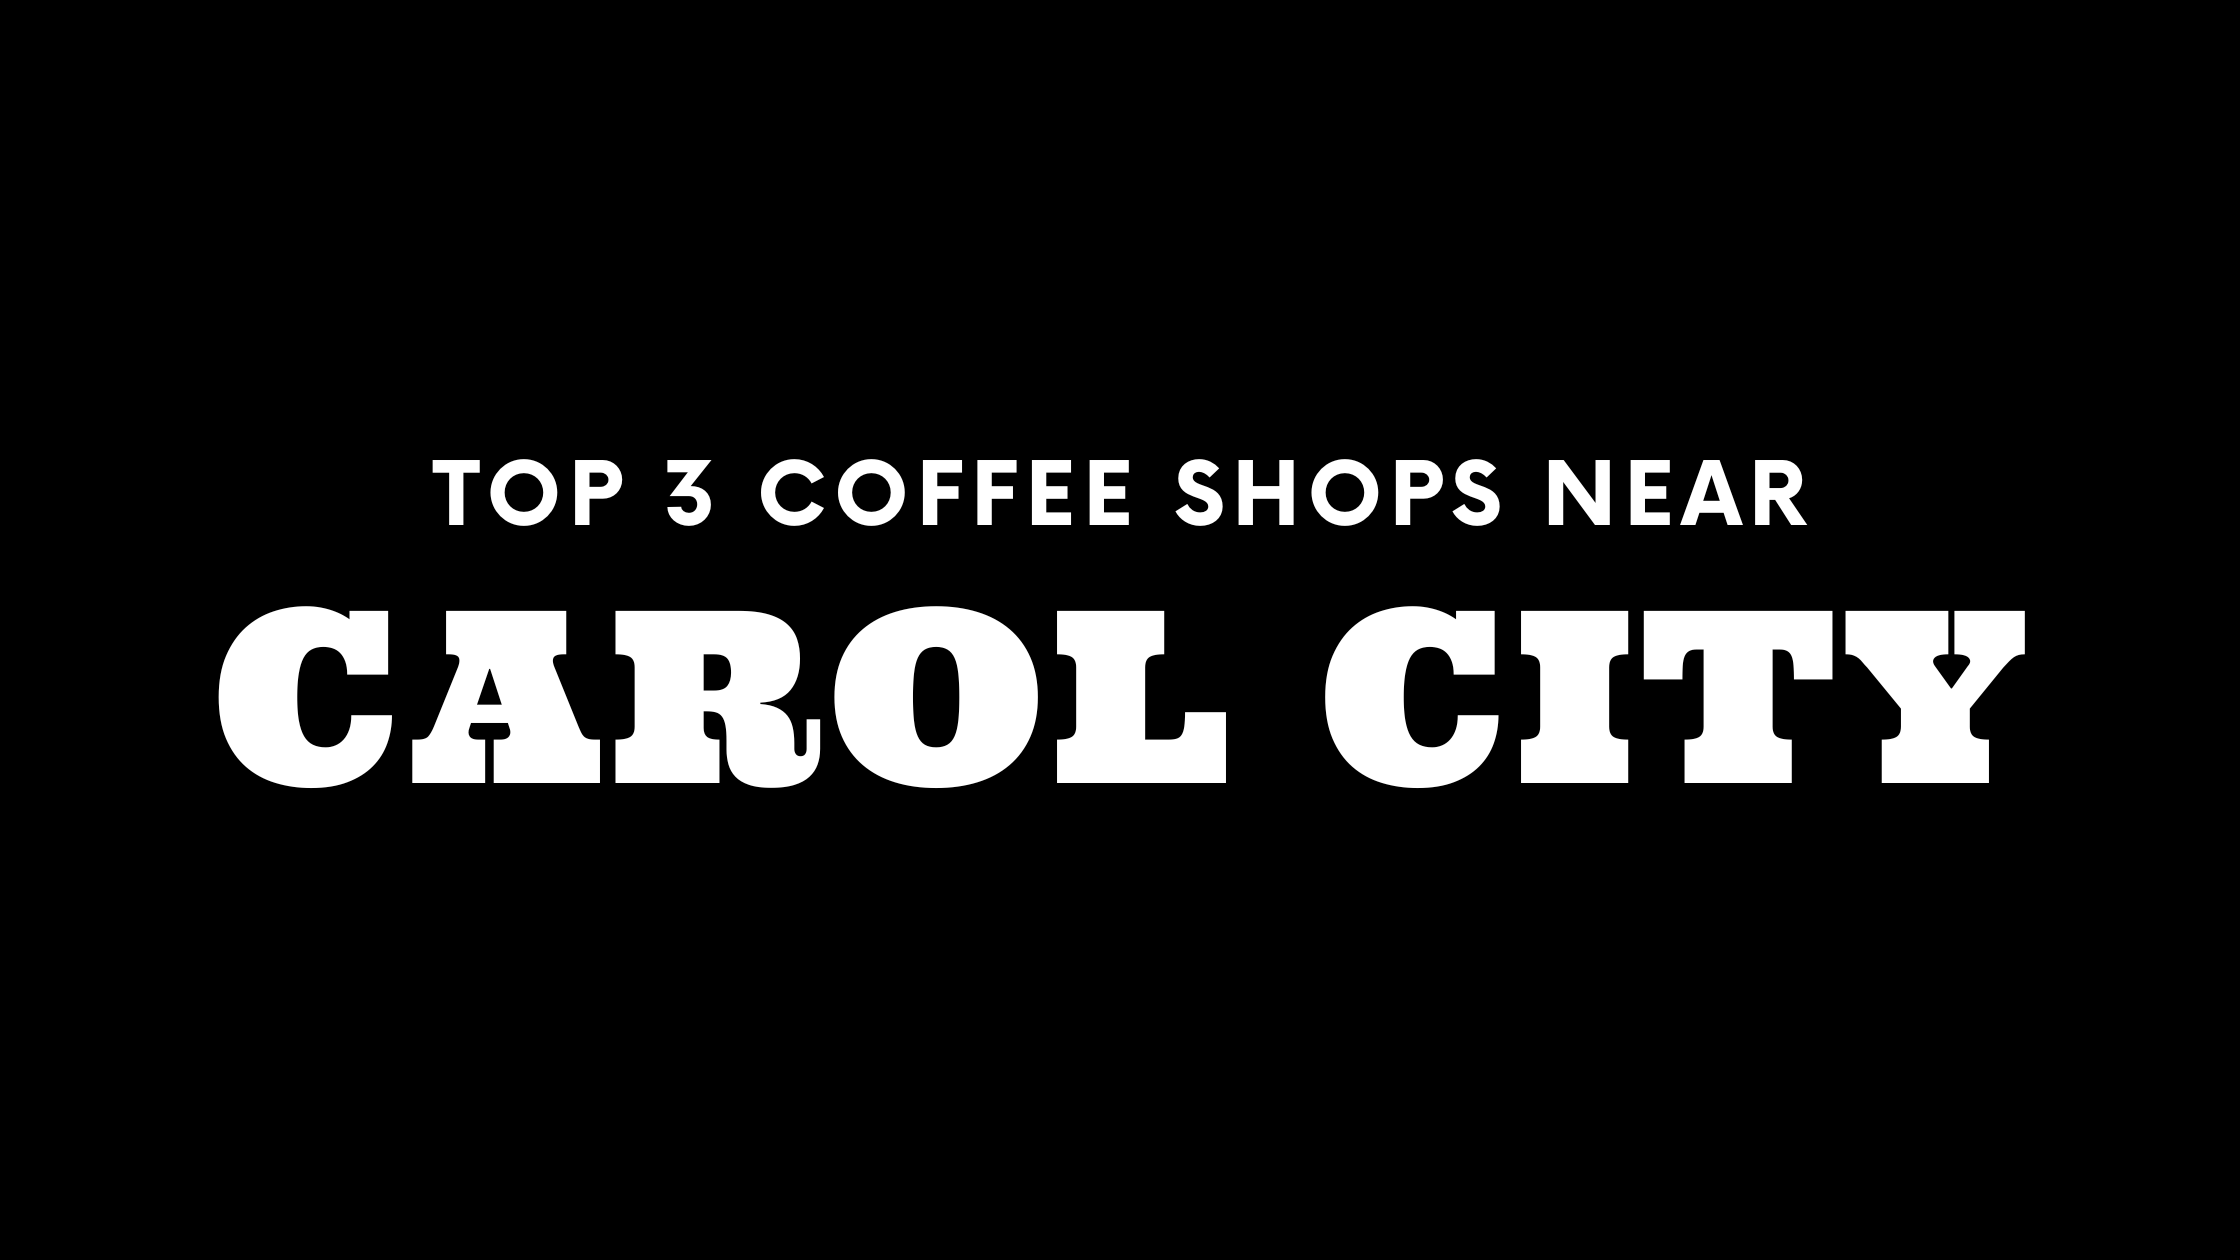 Top 3 Coffee Shops near Carol City